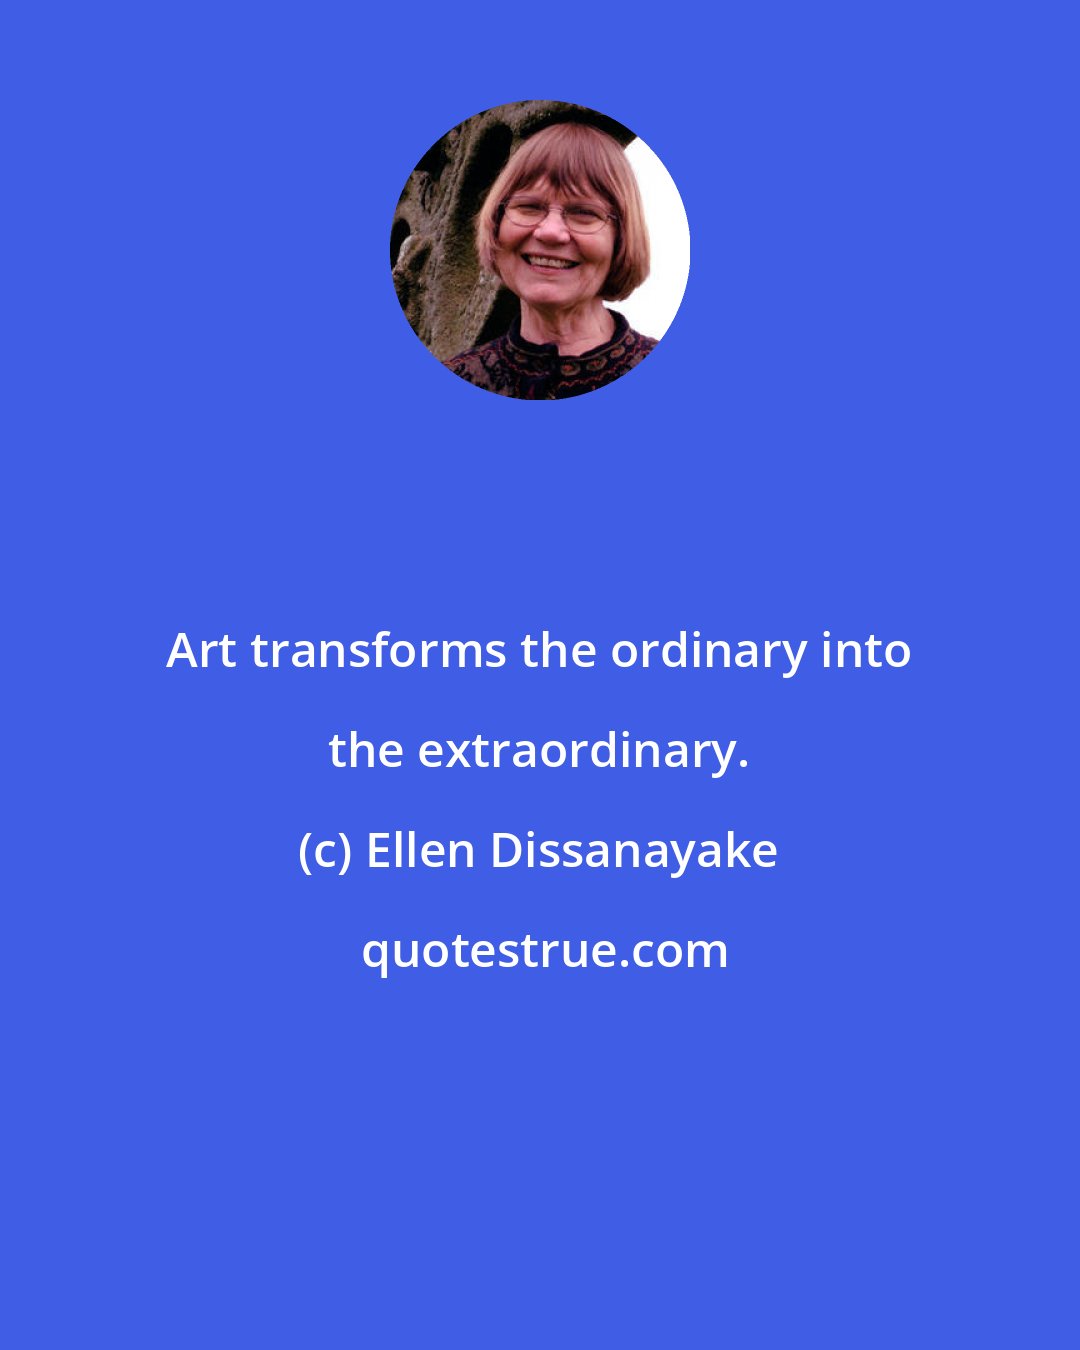 Ellen Dissanayake: Art transforms the ordinary into the extraordinary.